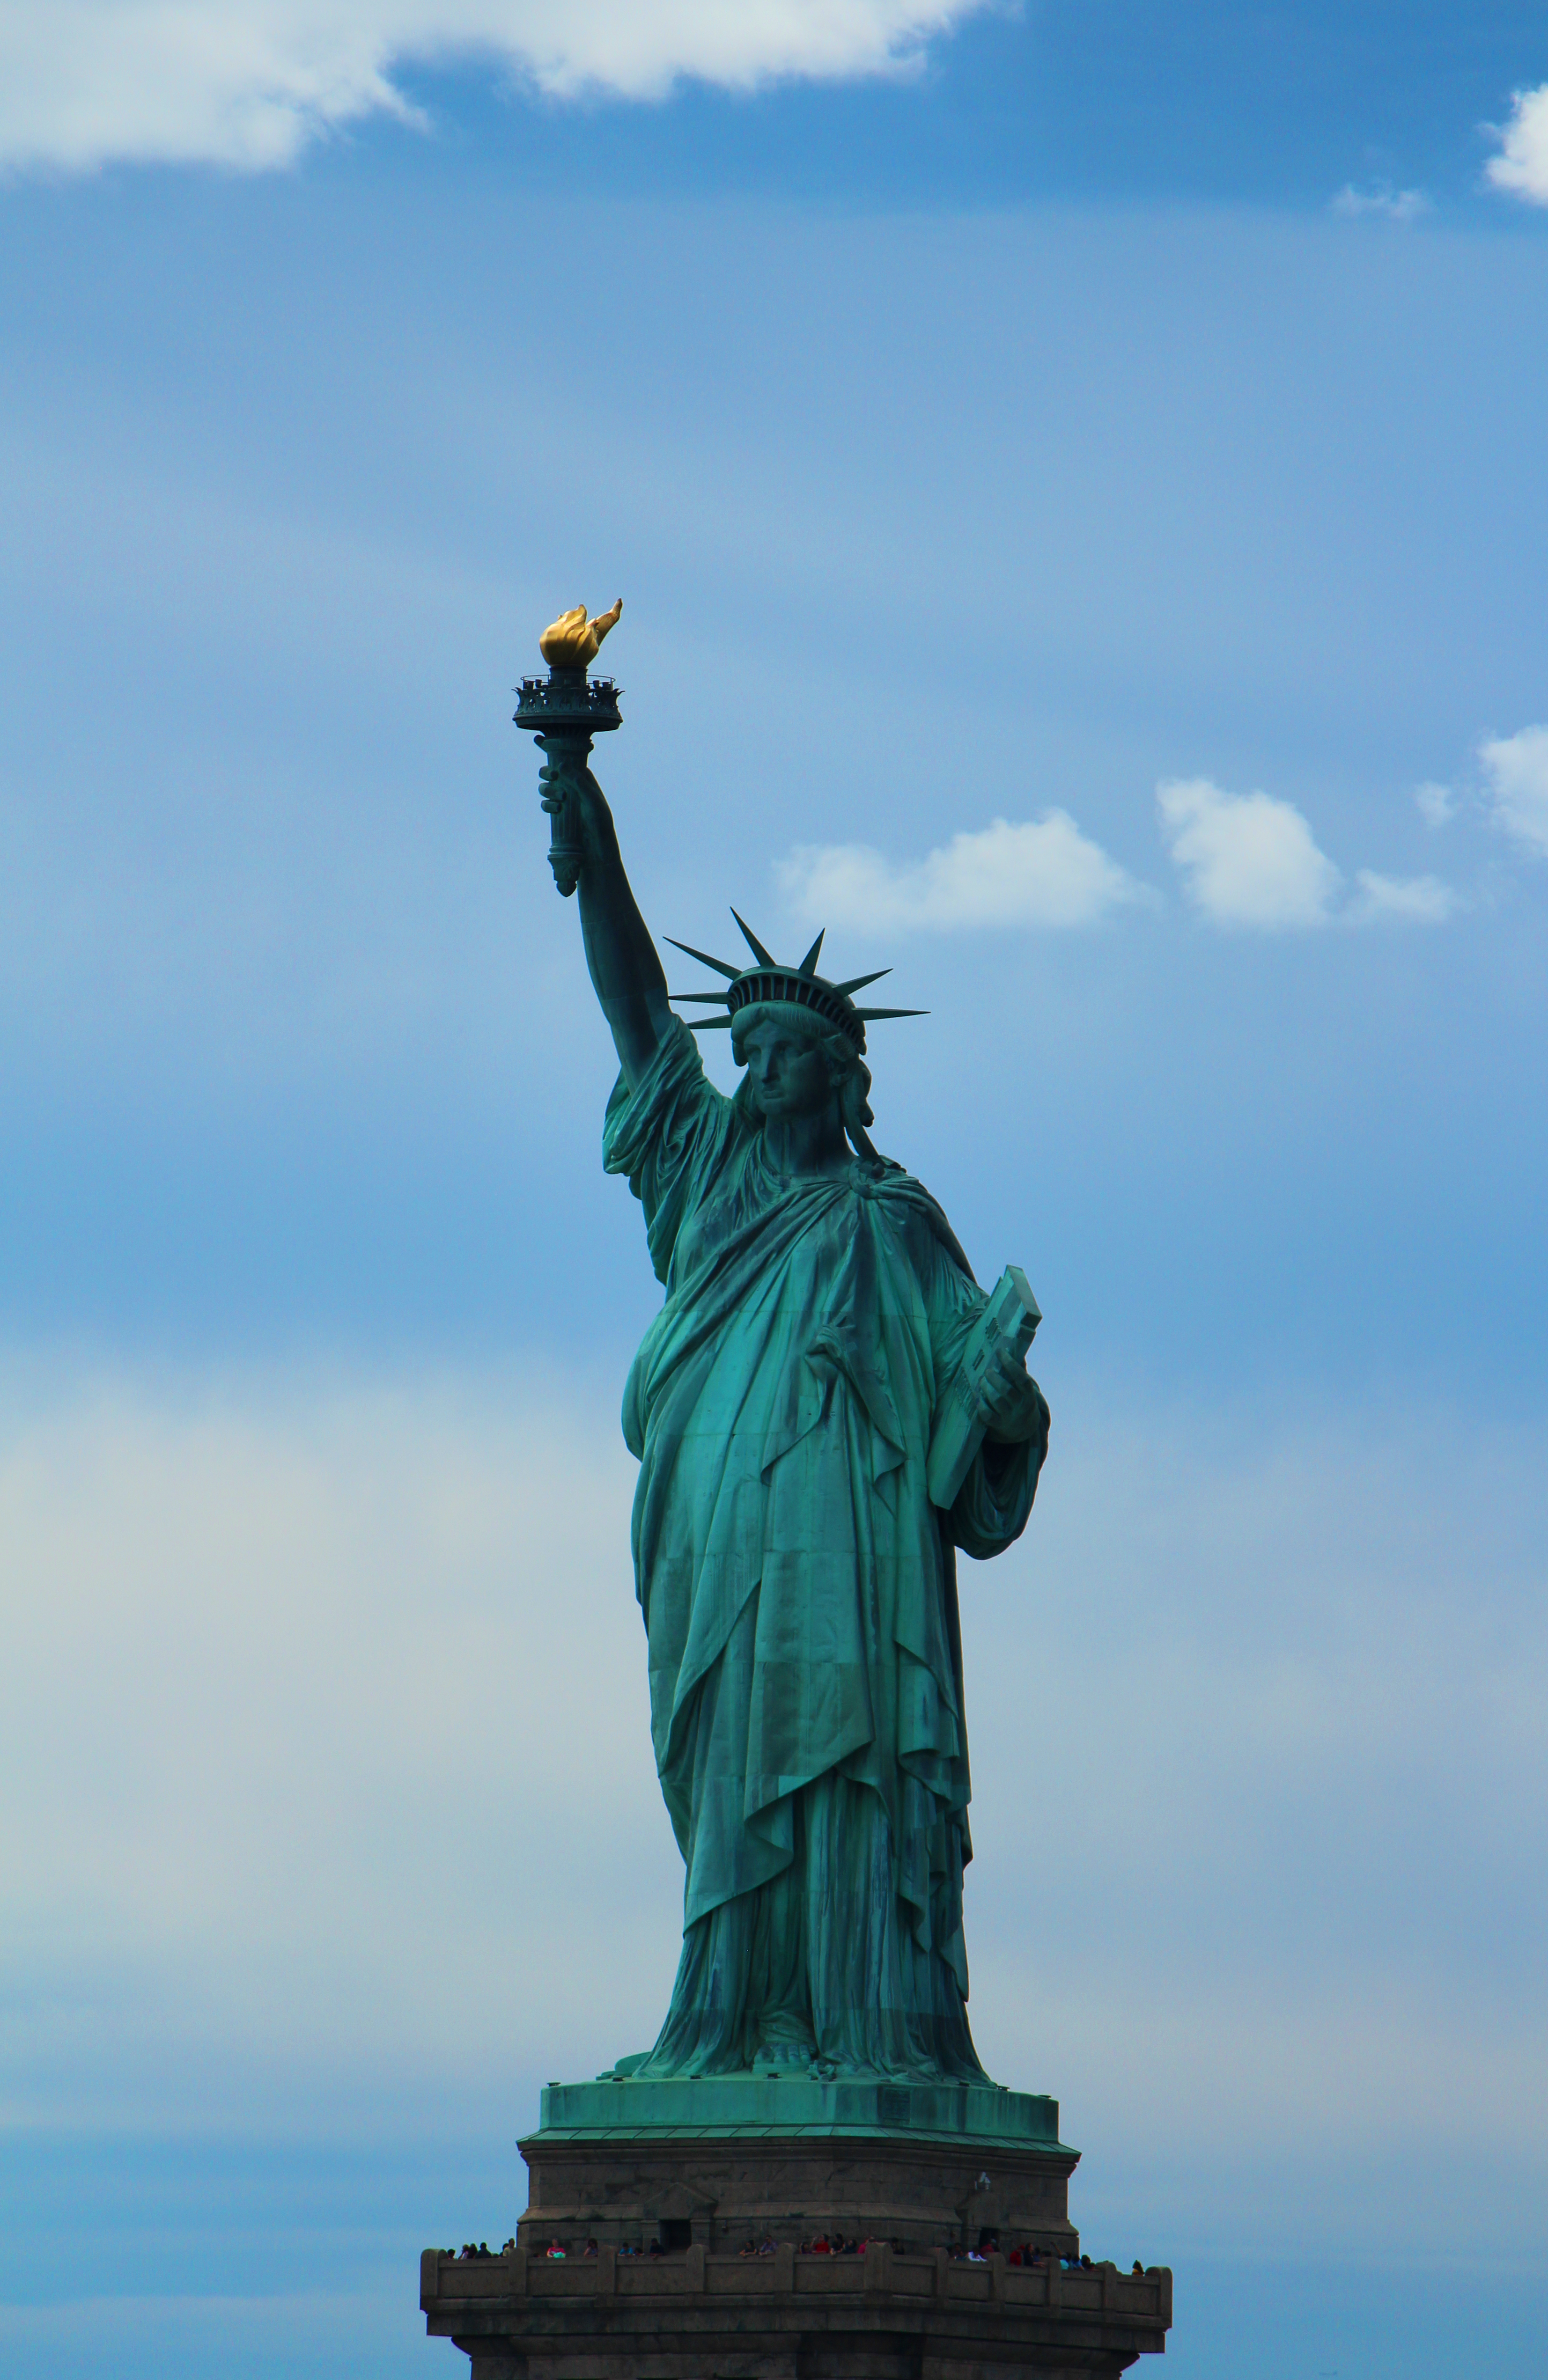 Statue of liberty, New York